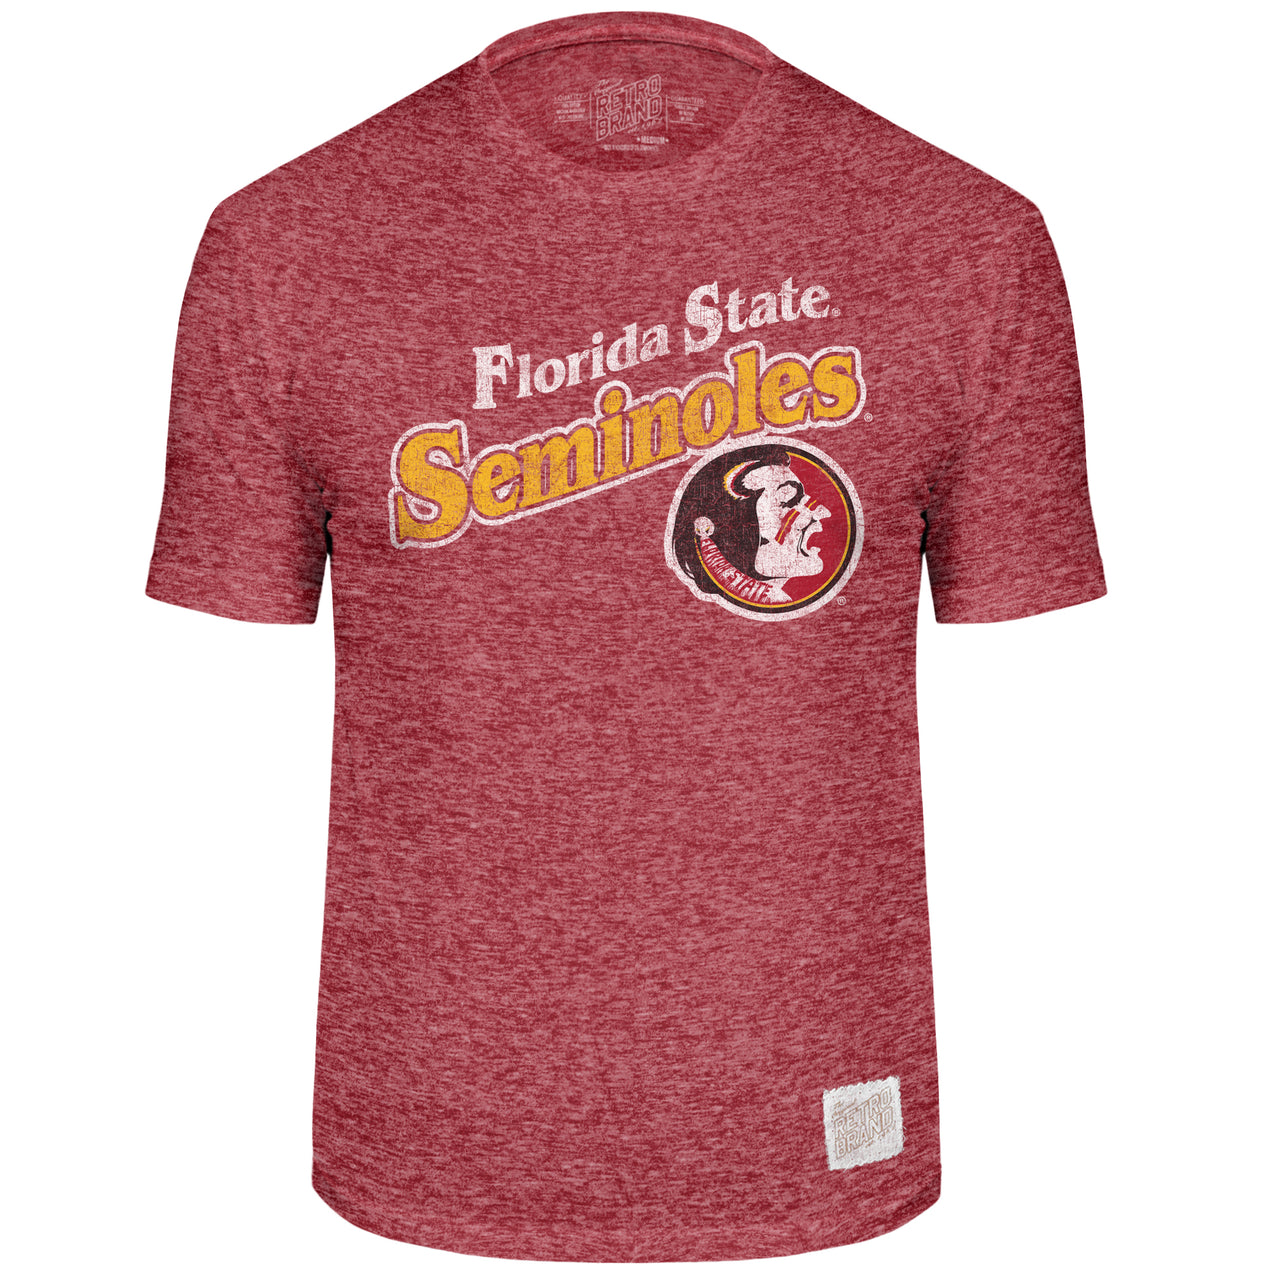 Florida State Seminoles Script over Logo Vintage Tshirt